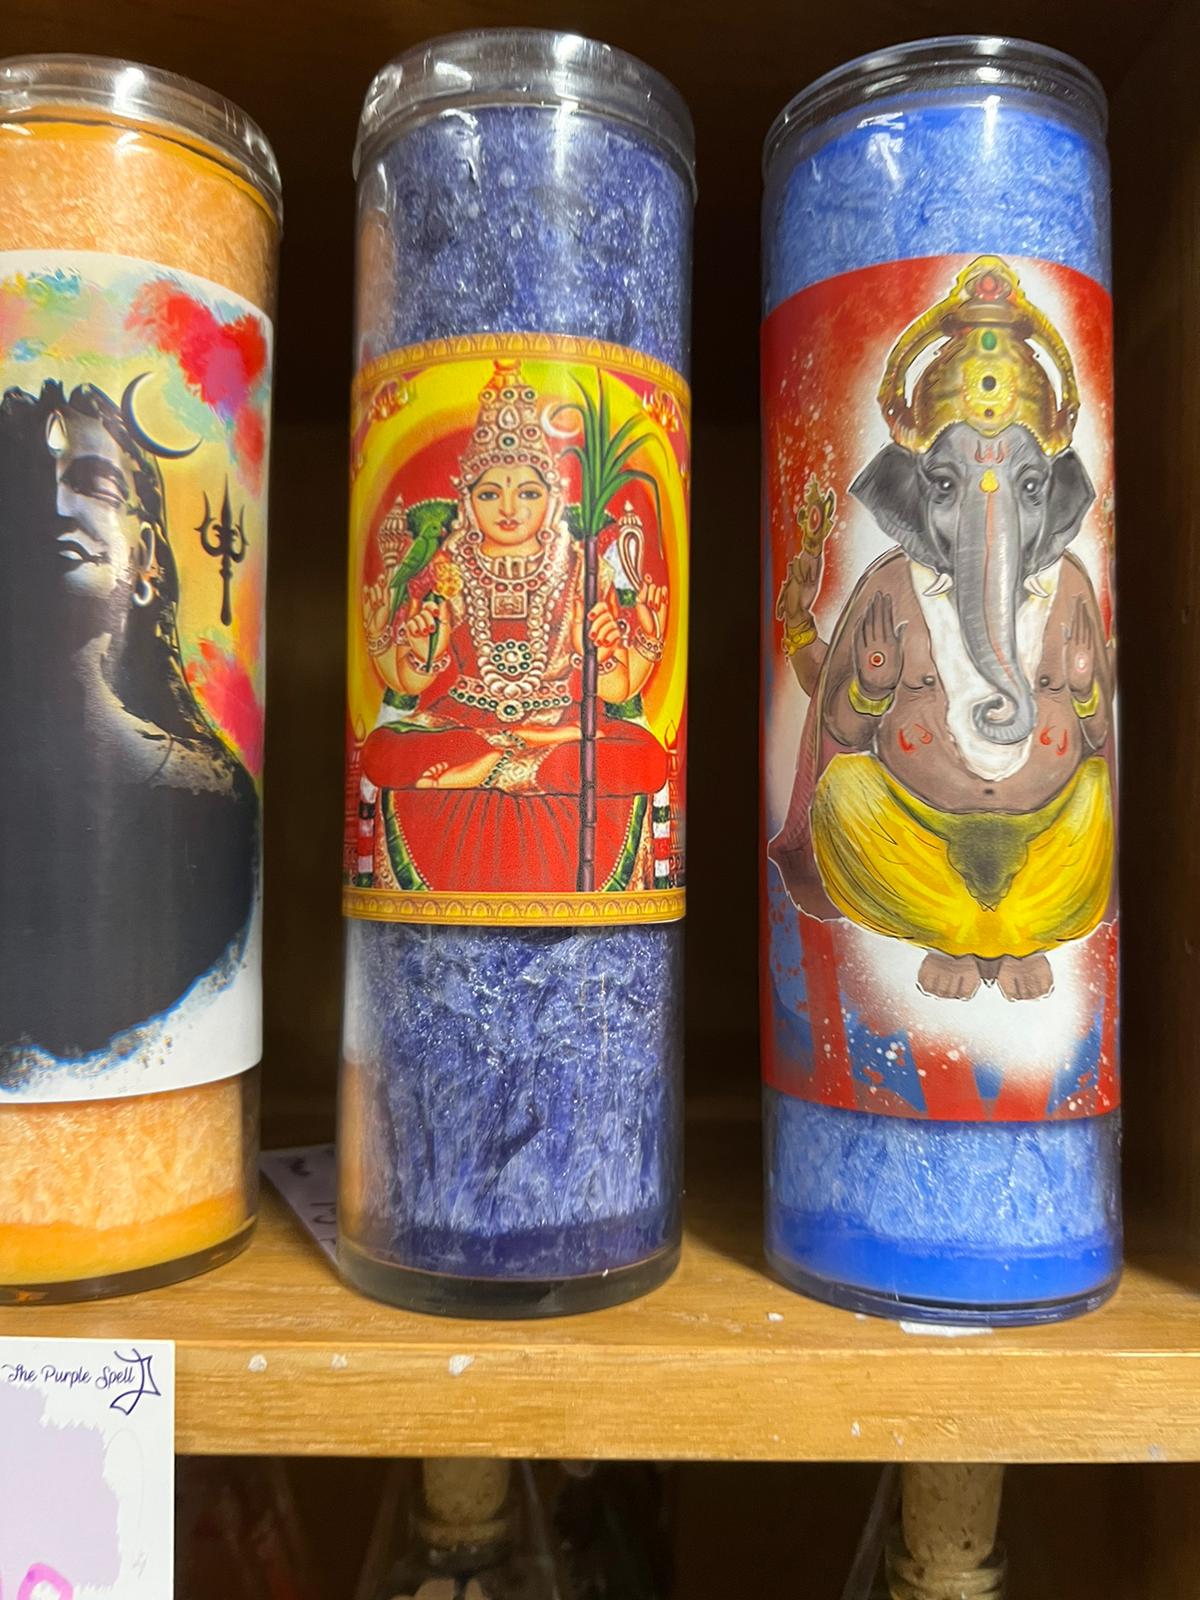 Tripurasundari 7 Day Candle | Spiritual Ritual Candle | Religious Candle | Scented Candle